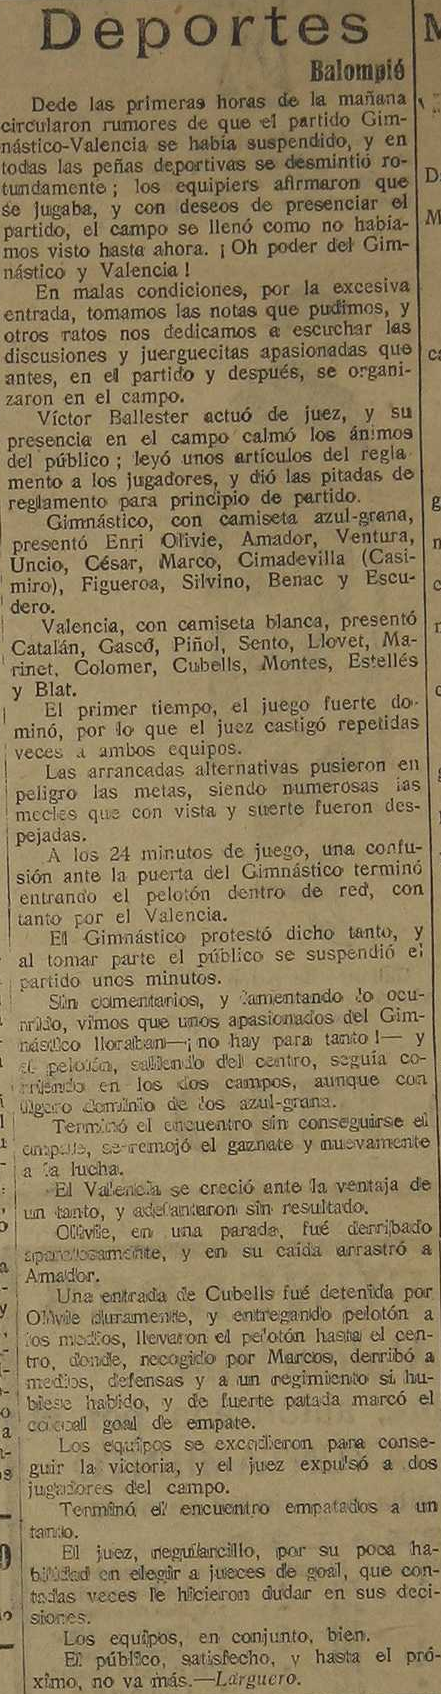 1921.01.02 (2 января 1921), Валенсия - Гимнастико, 1-1.png